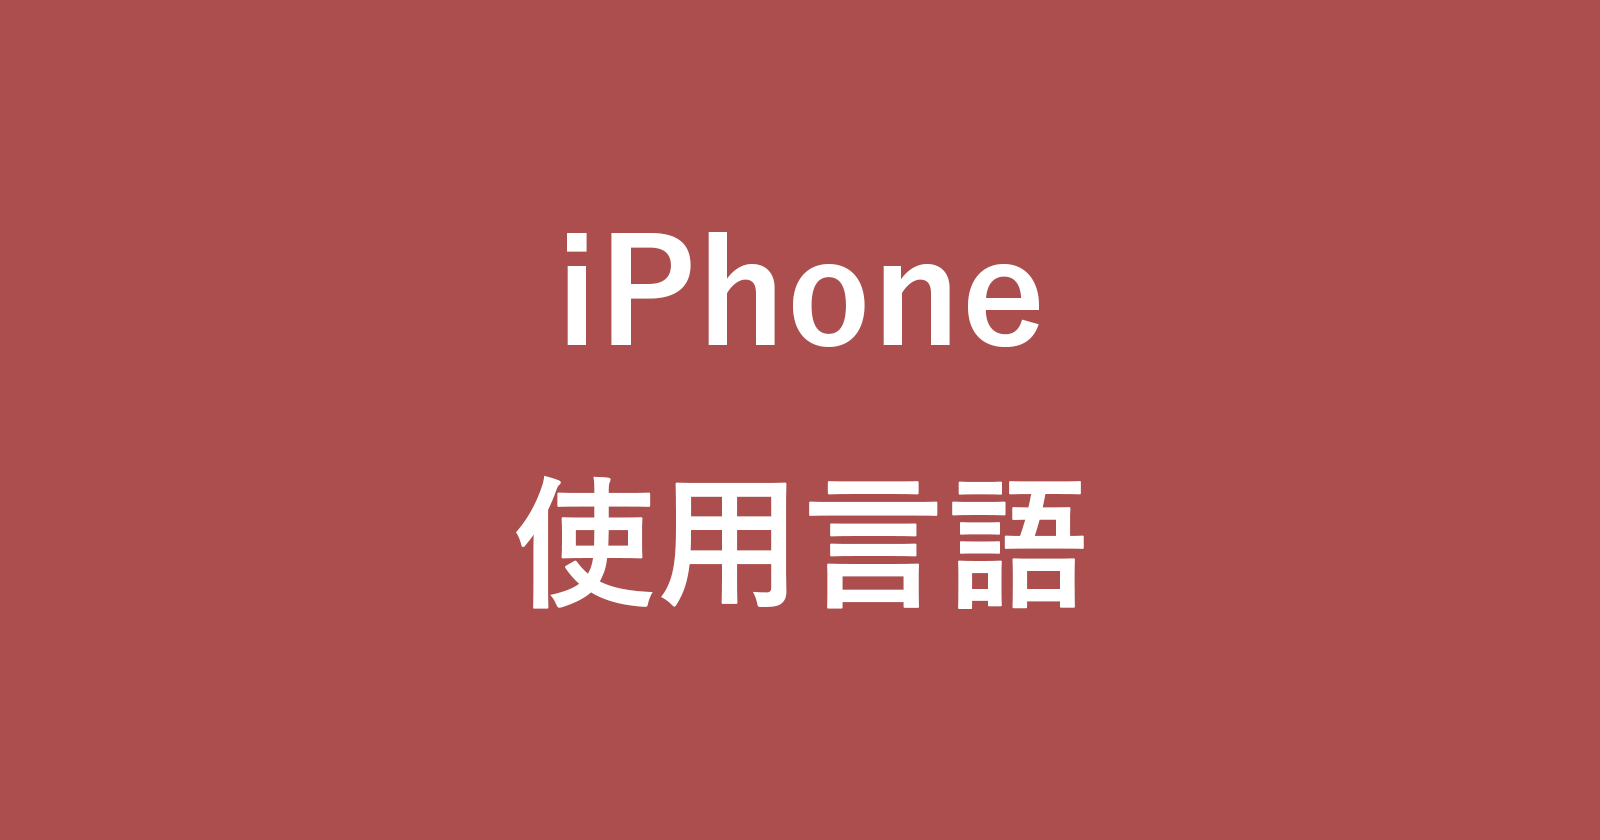 iphone language